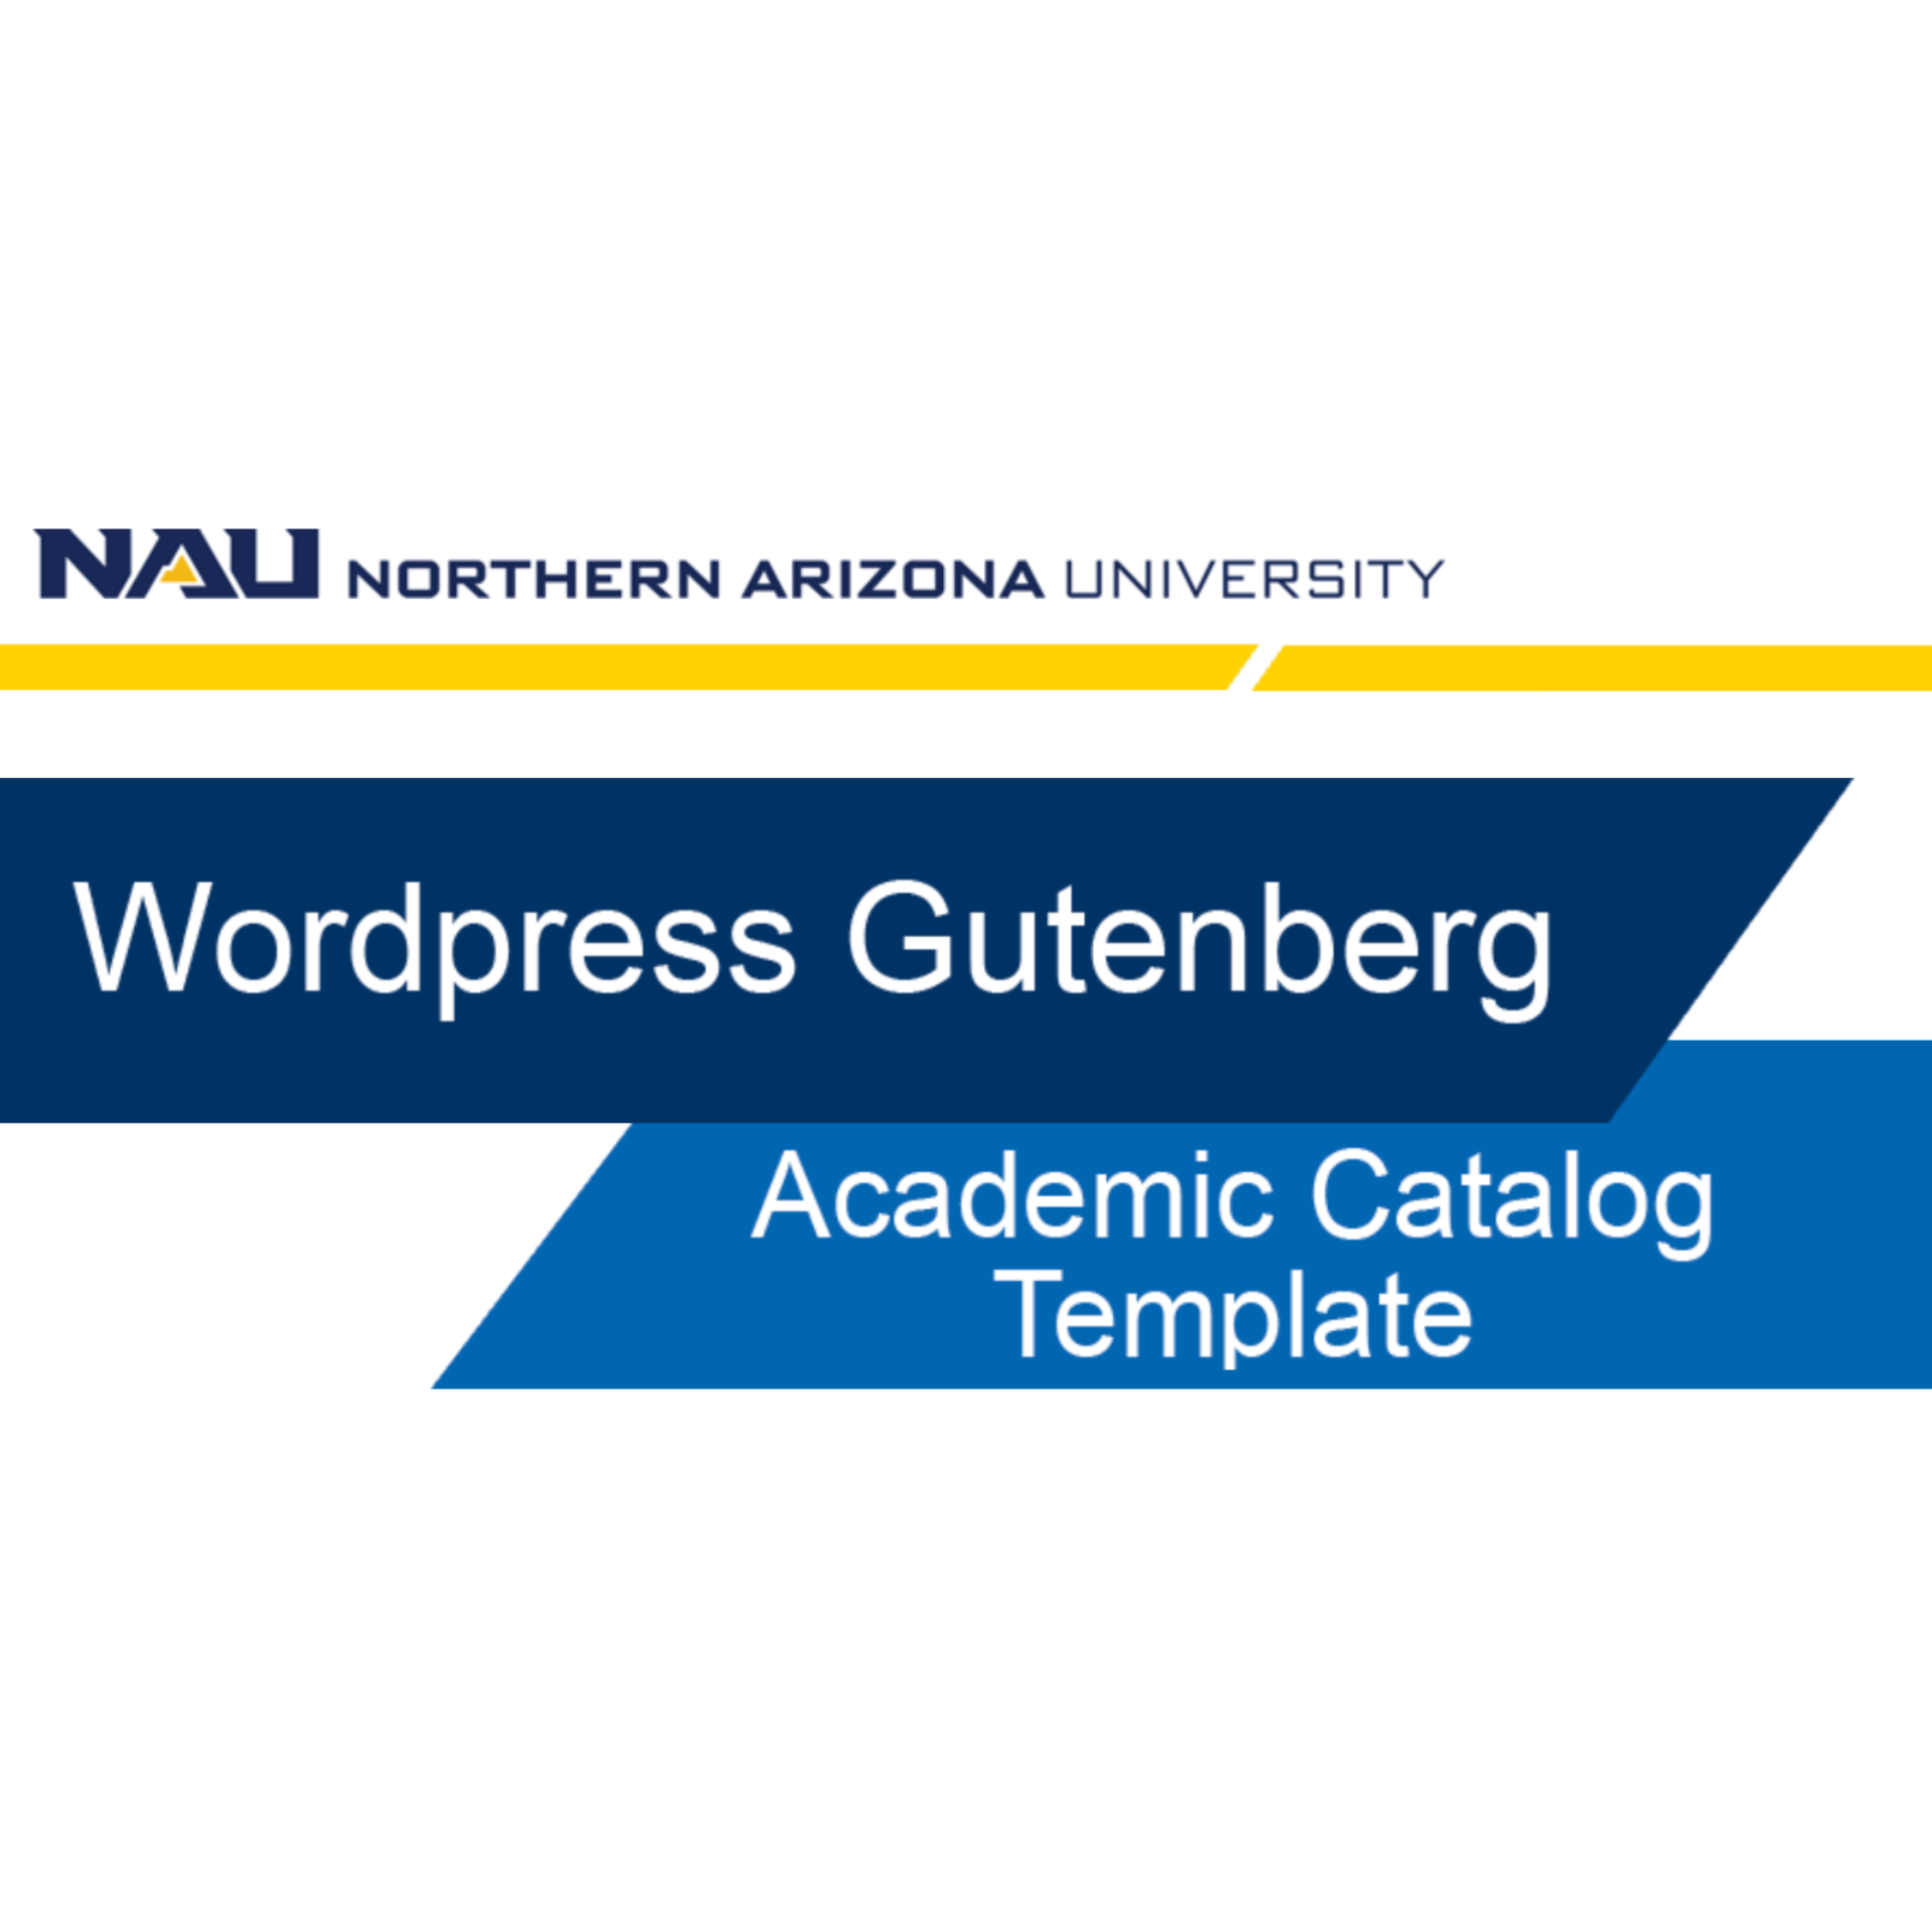 Thumbnail image of the Northern Arizona University WordPress Gutenberg tutorial start page, titled 'Academic Catalog Template'.